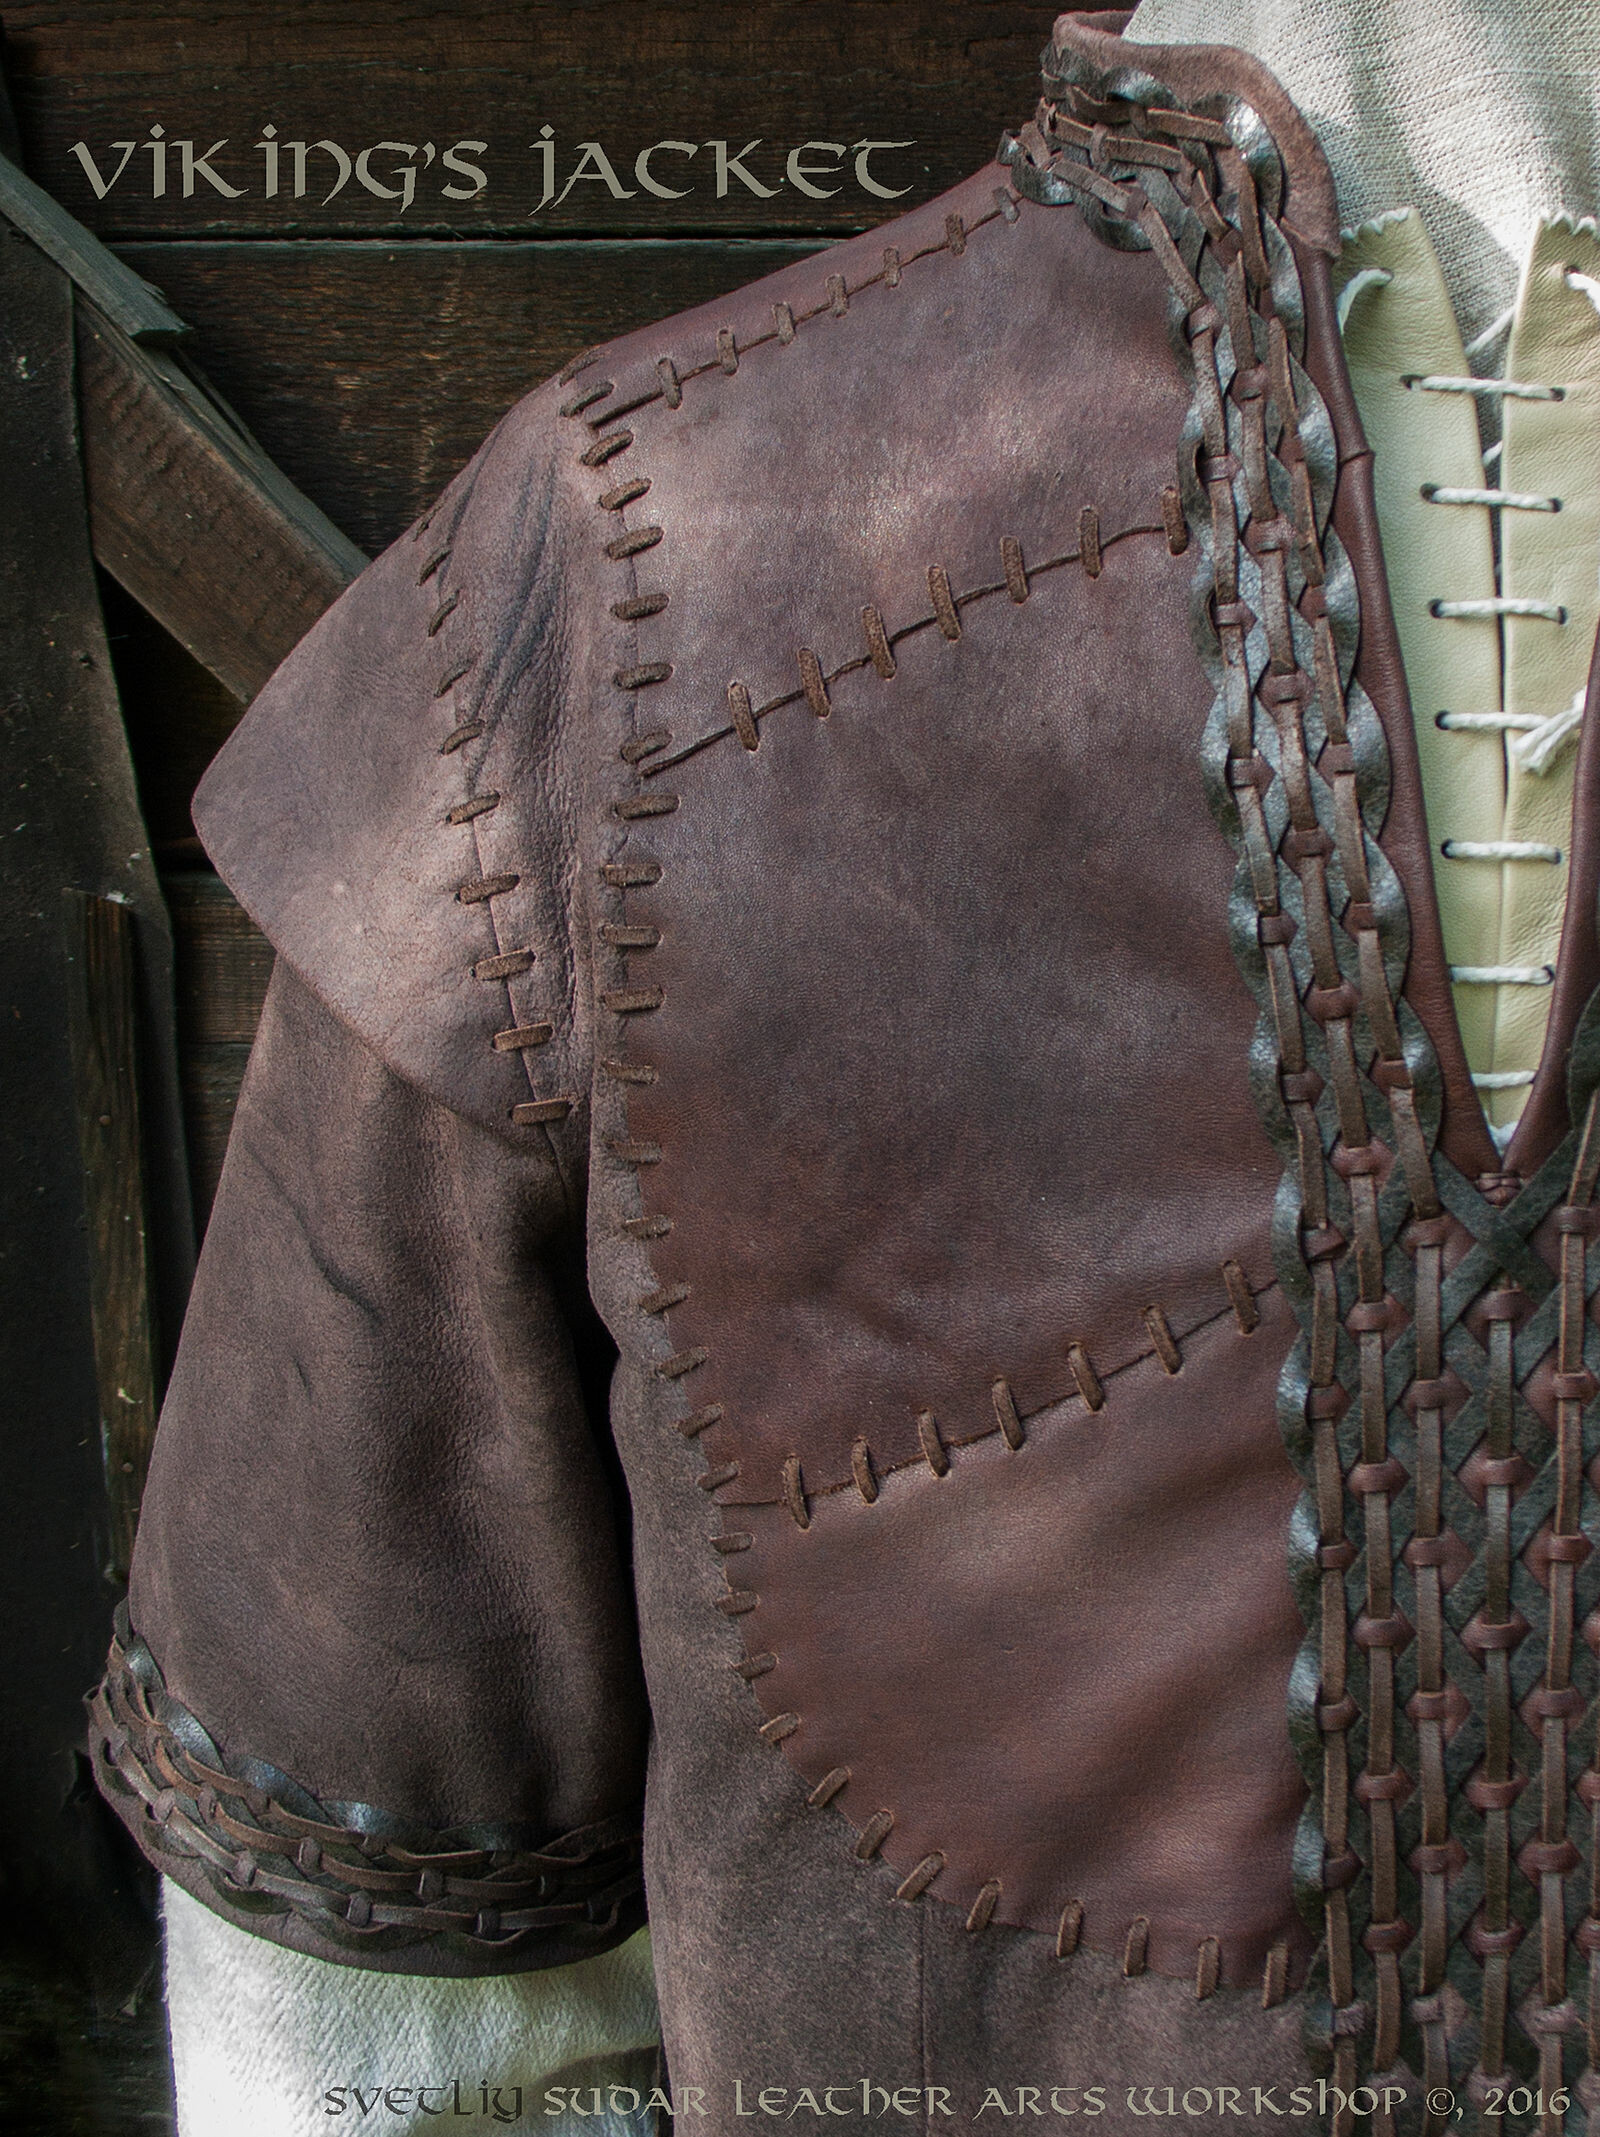 https://cdnb.artstation.com/p/assets/images/images/015/520/447/large/alex-rukavishnikov-viking-leather-jacket-inspired-ragnar-lothbrok-by-svetliy-sudar-da4gckf-fullview.jpg?1548676413